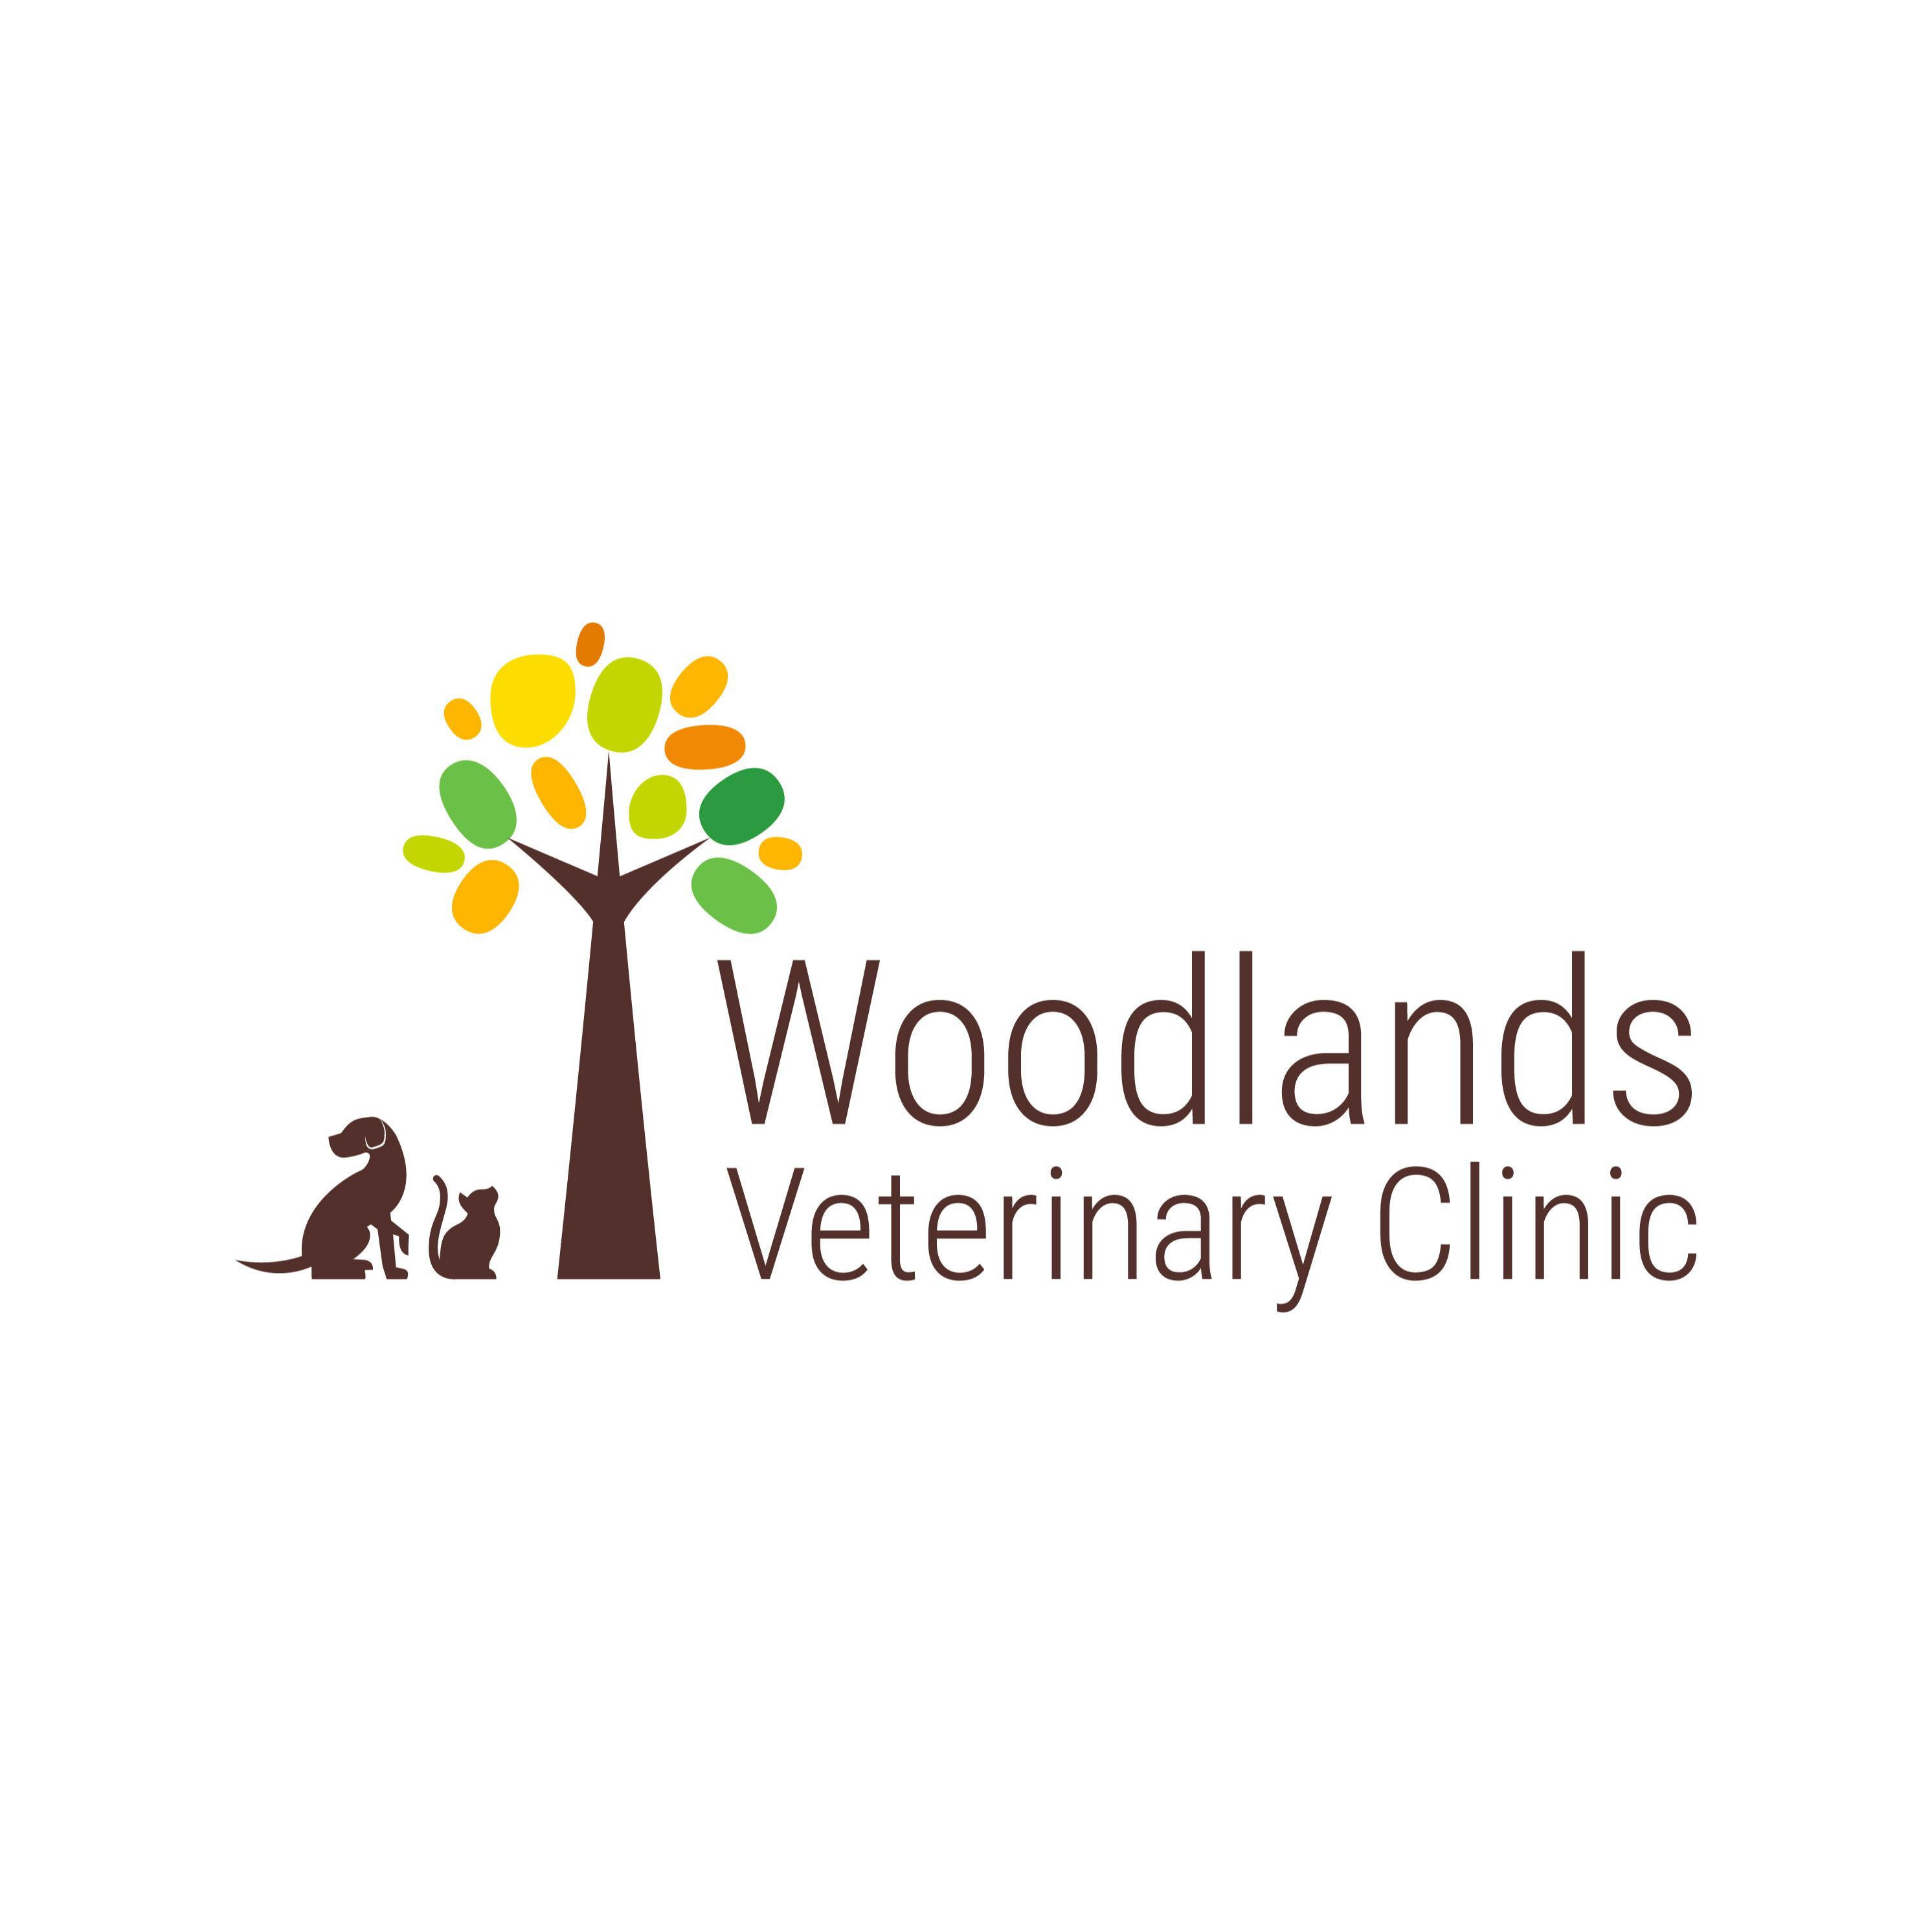 Woodlands Veterinary Clinic - Warden Hill - Cheltenham, Gloucestershire GL51 3GA - 01242 255133 | ShowMeLocal.com